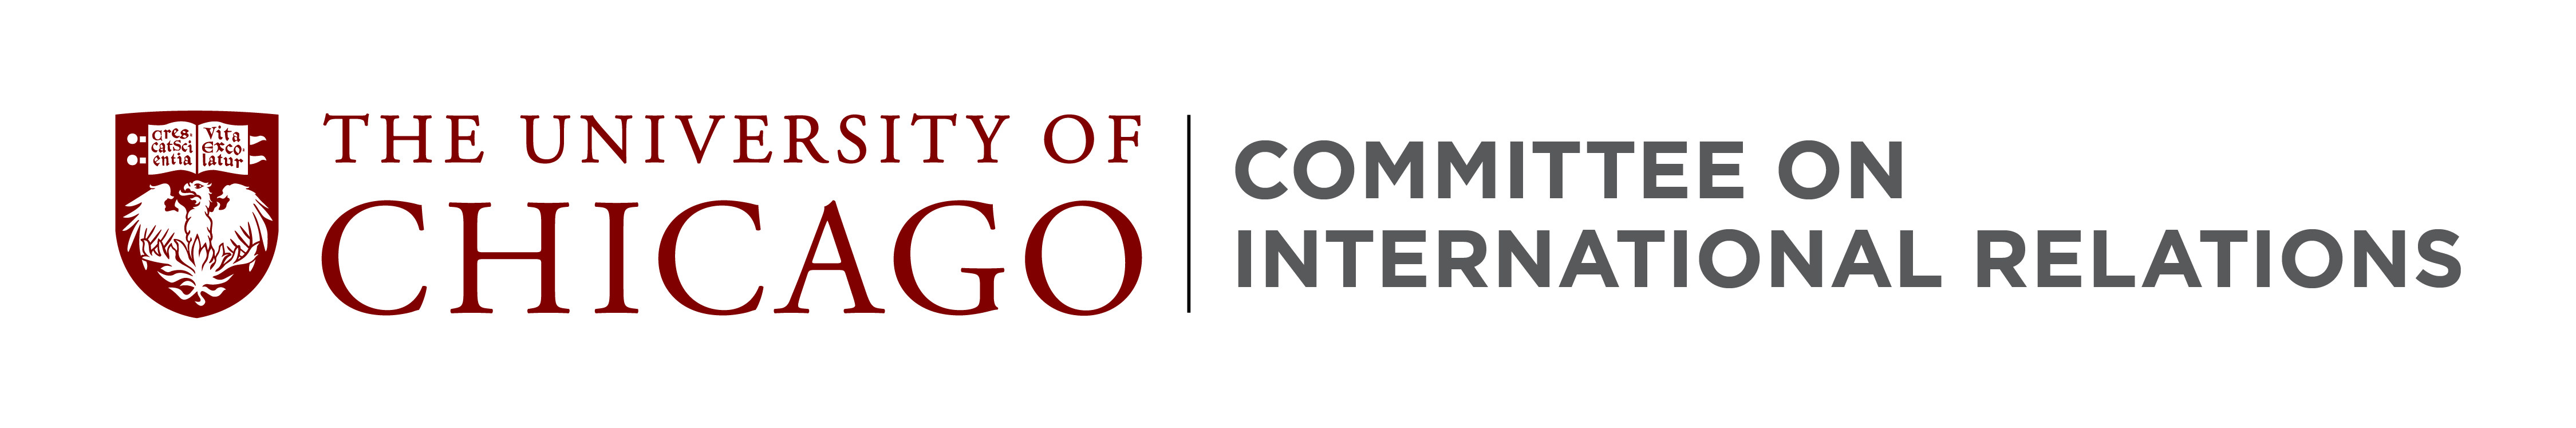 UC Committee on International Relations Logo